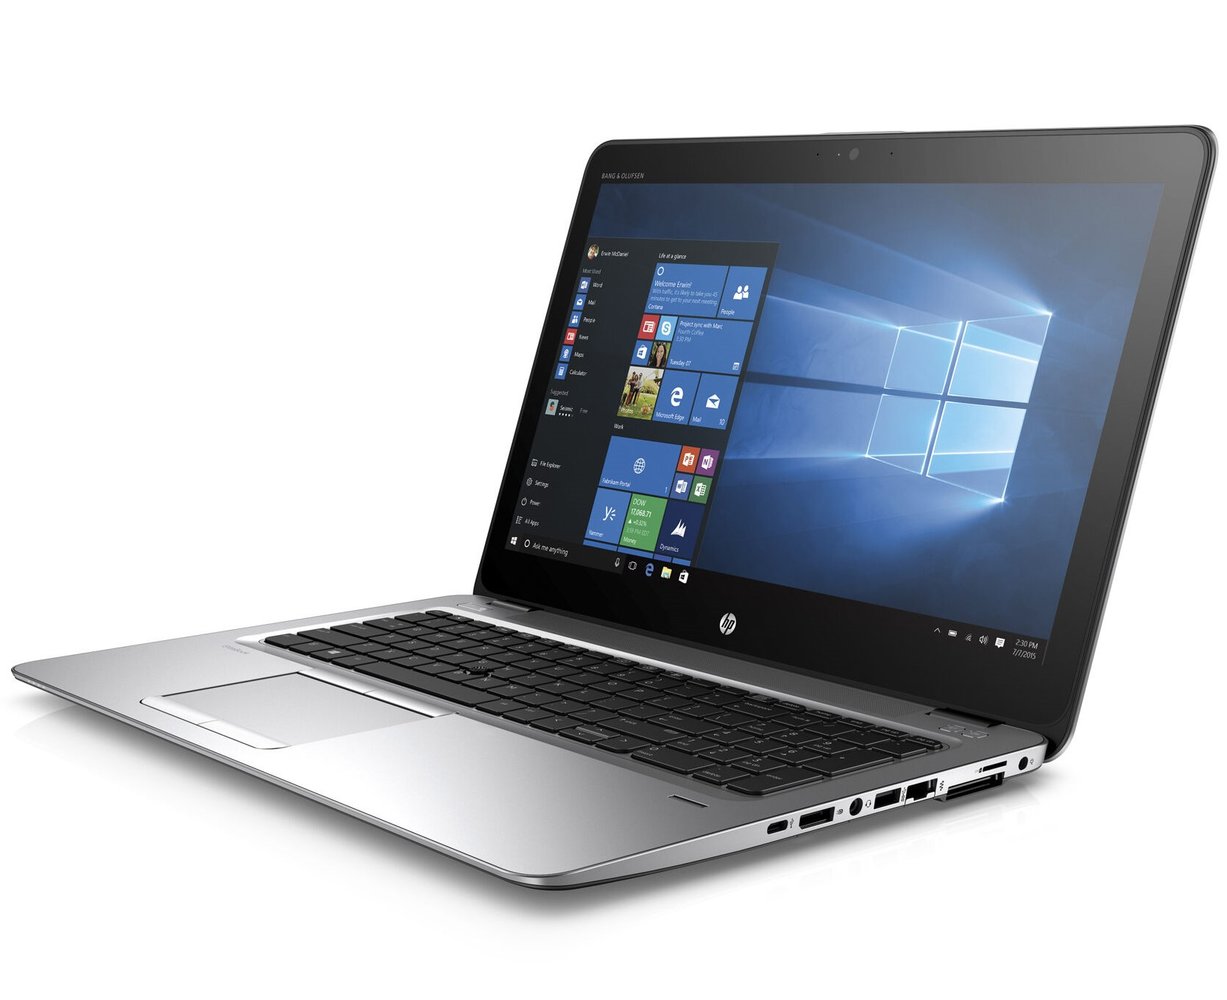 HP EliteBook 850 G3 - 8Go - SSD 512Go